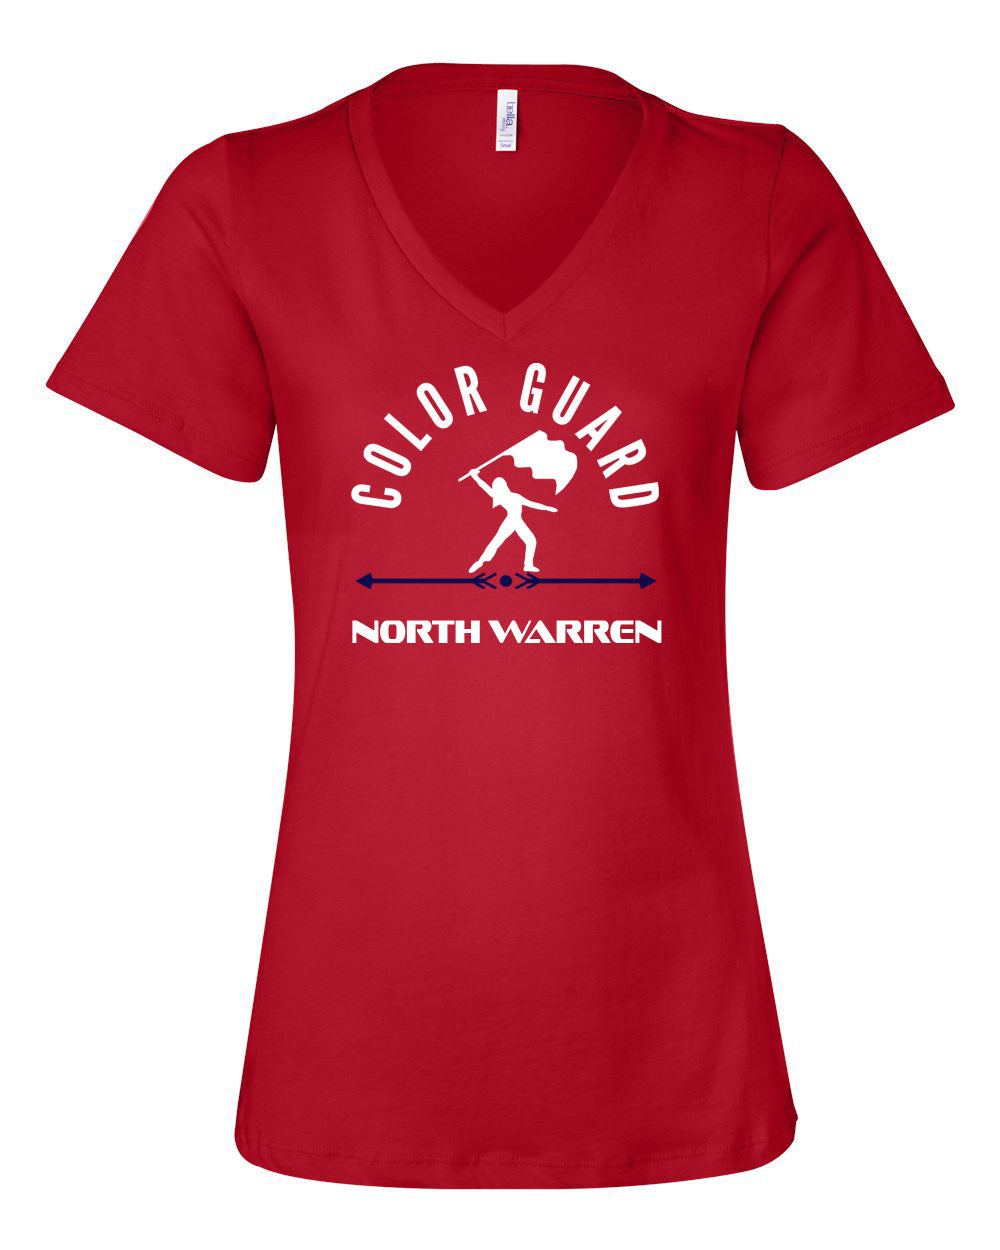 North Warren Band Design 5 V-neck T-shirt